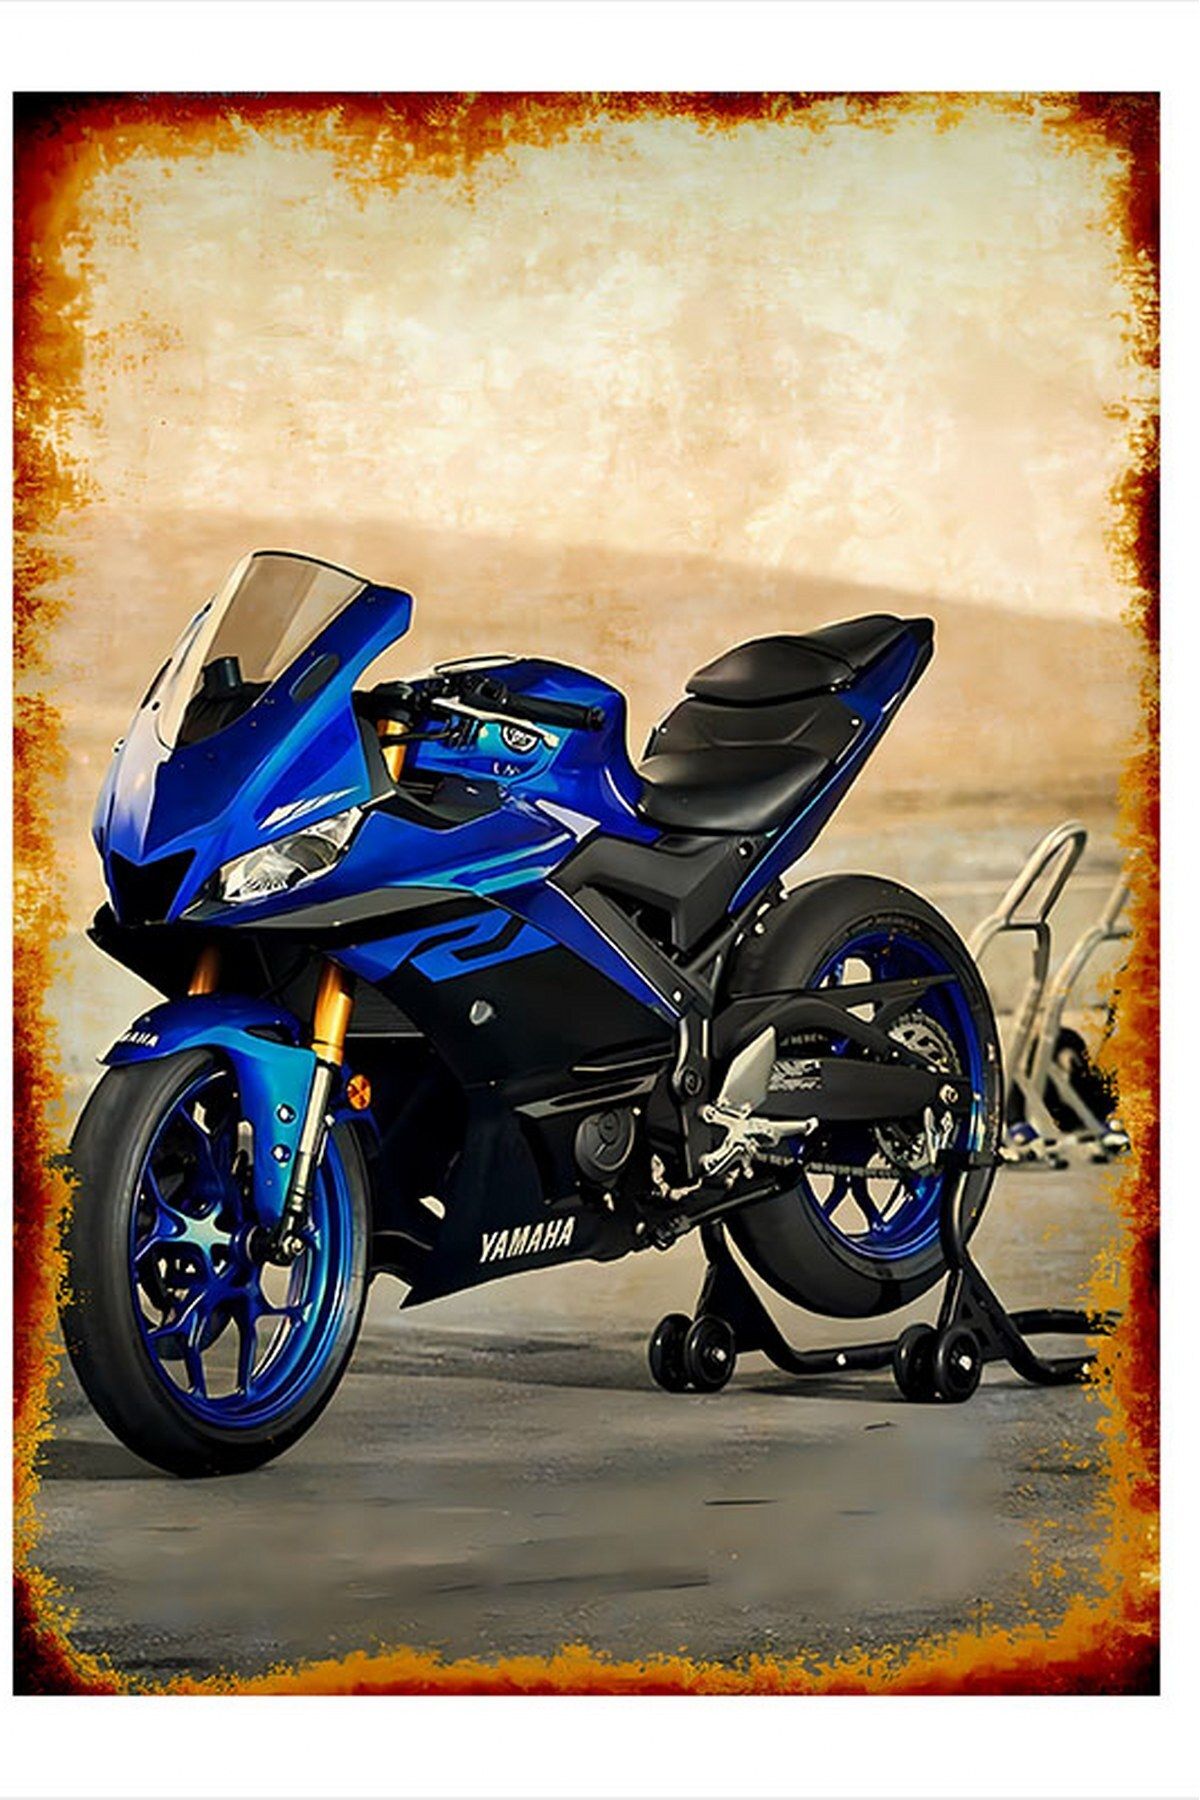 Teknomeg Karizma Tablo Yamaha Motosiklet Modern Ahşap Tablo 18cm X 27cm